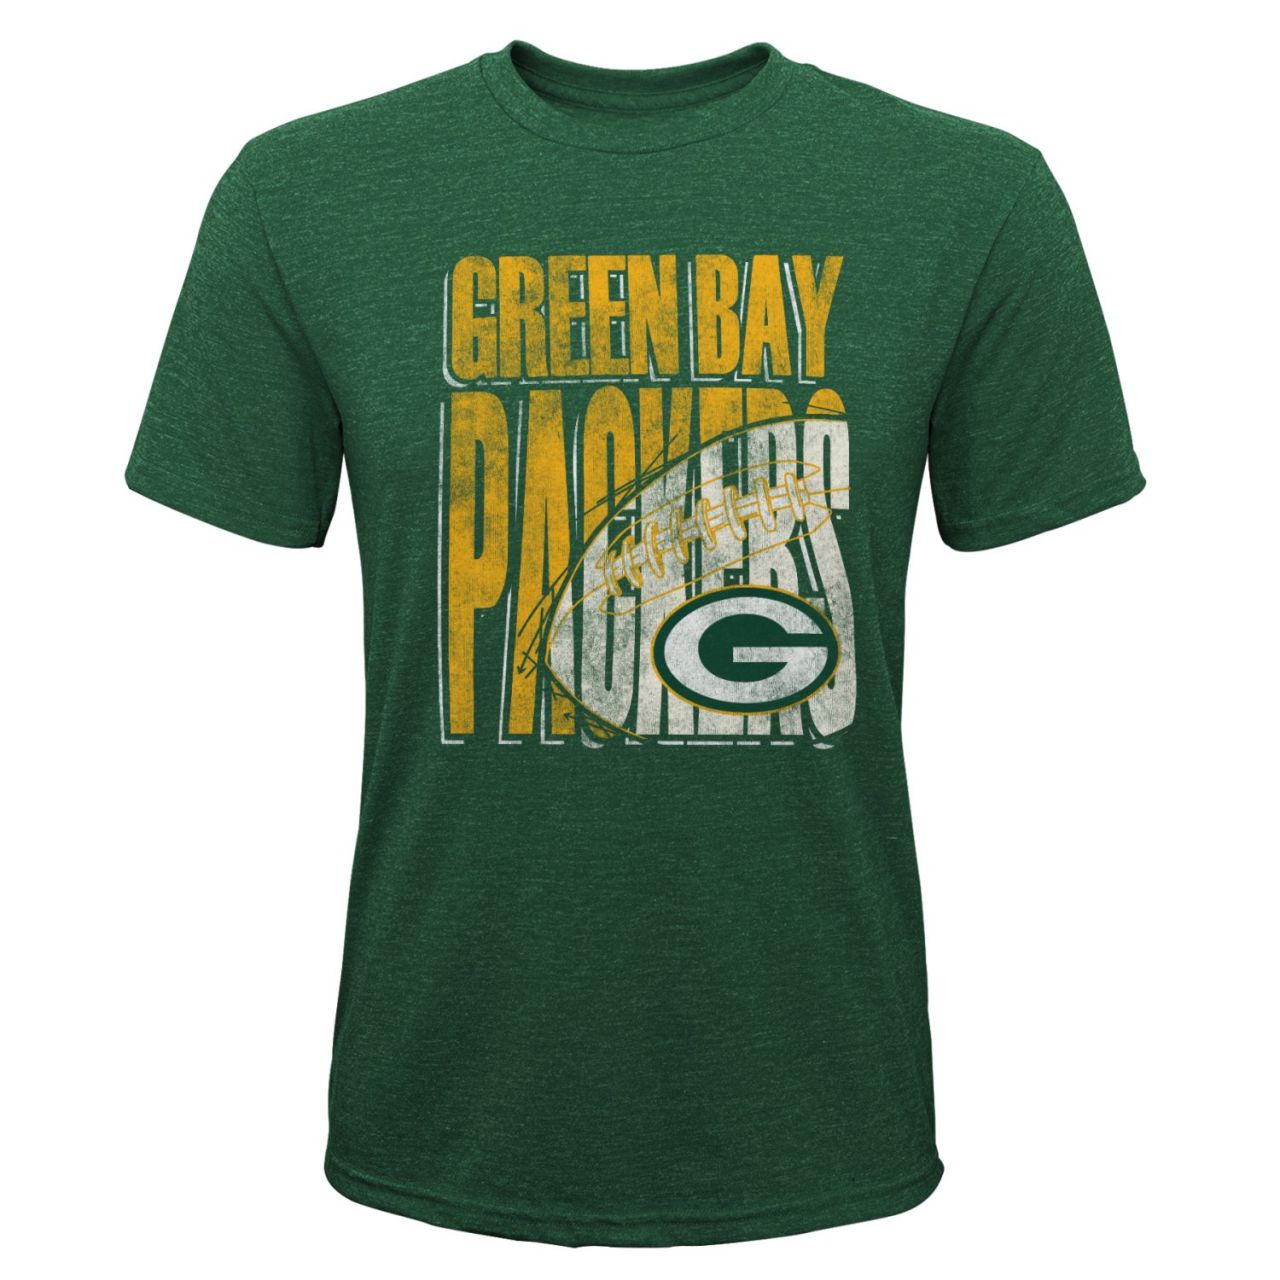 Kinder NFL Tri-Blend Shirt - SCORE Green Bay Packers von Outerstuff